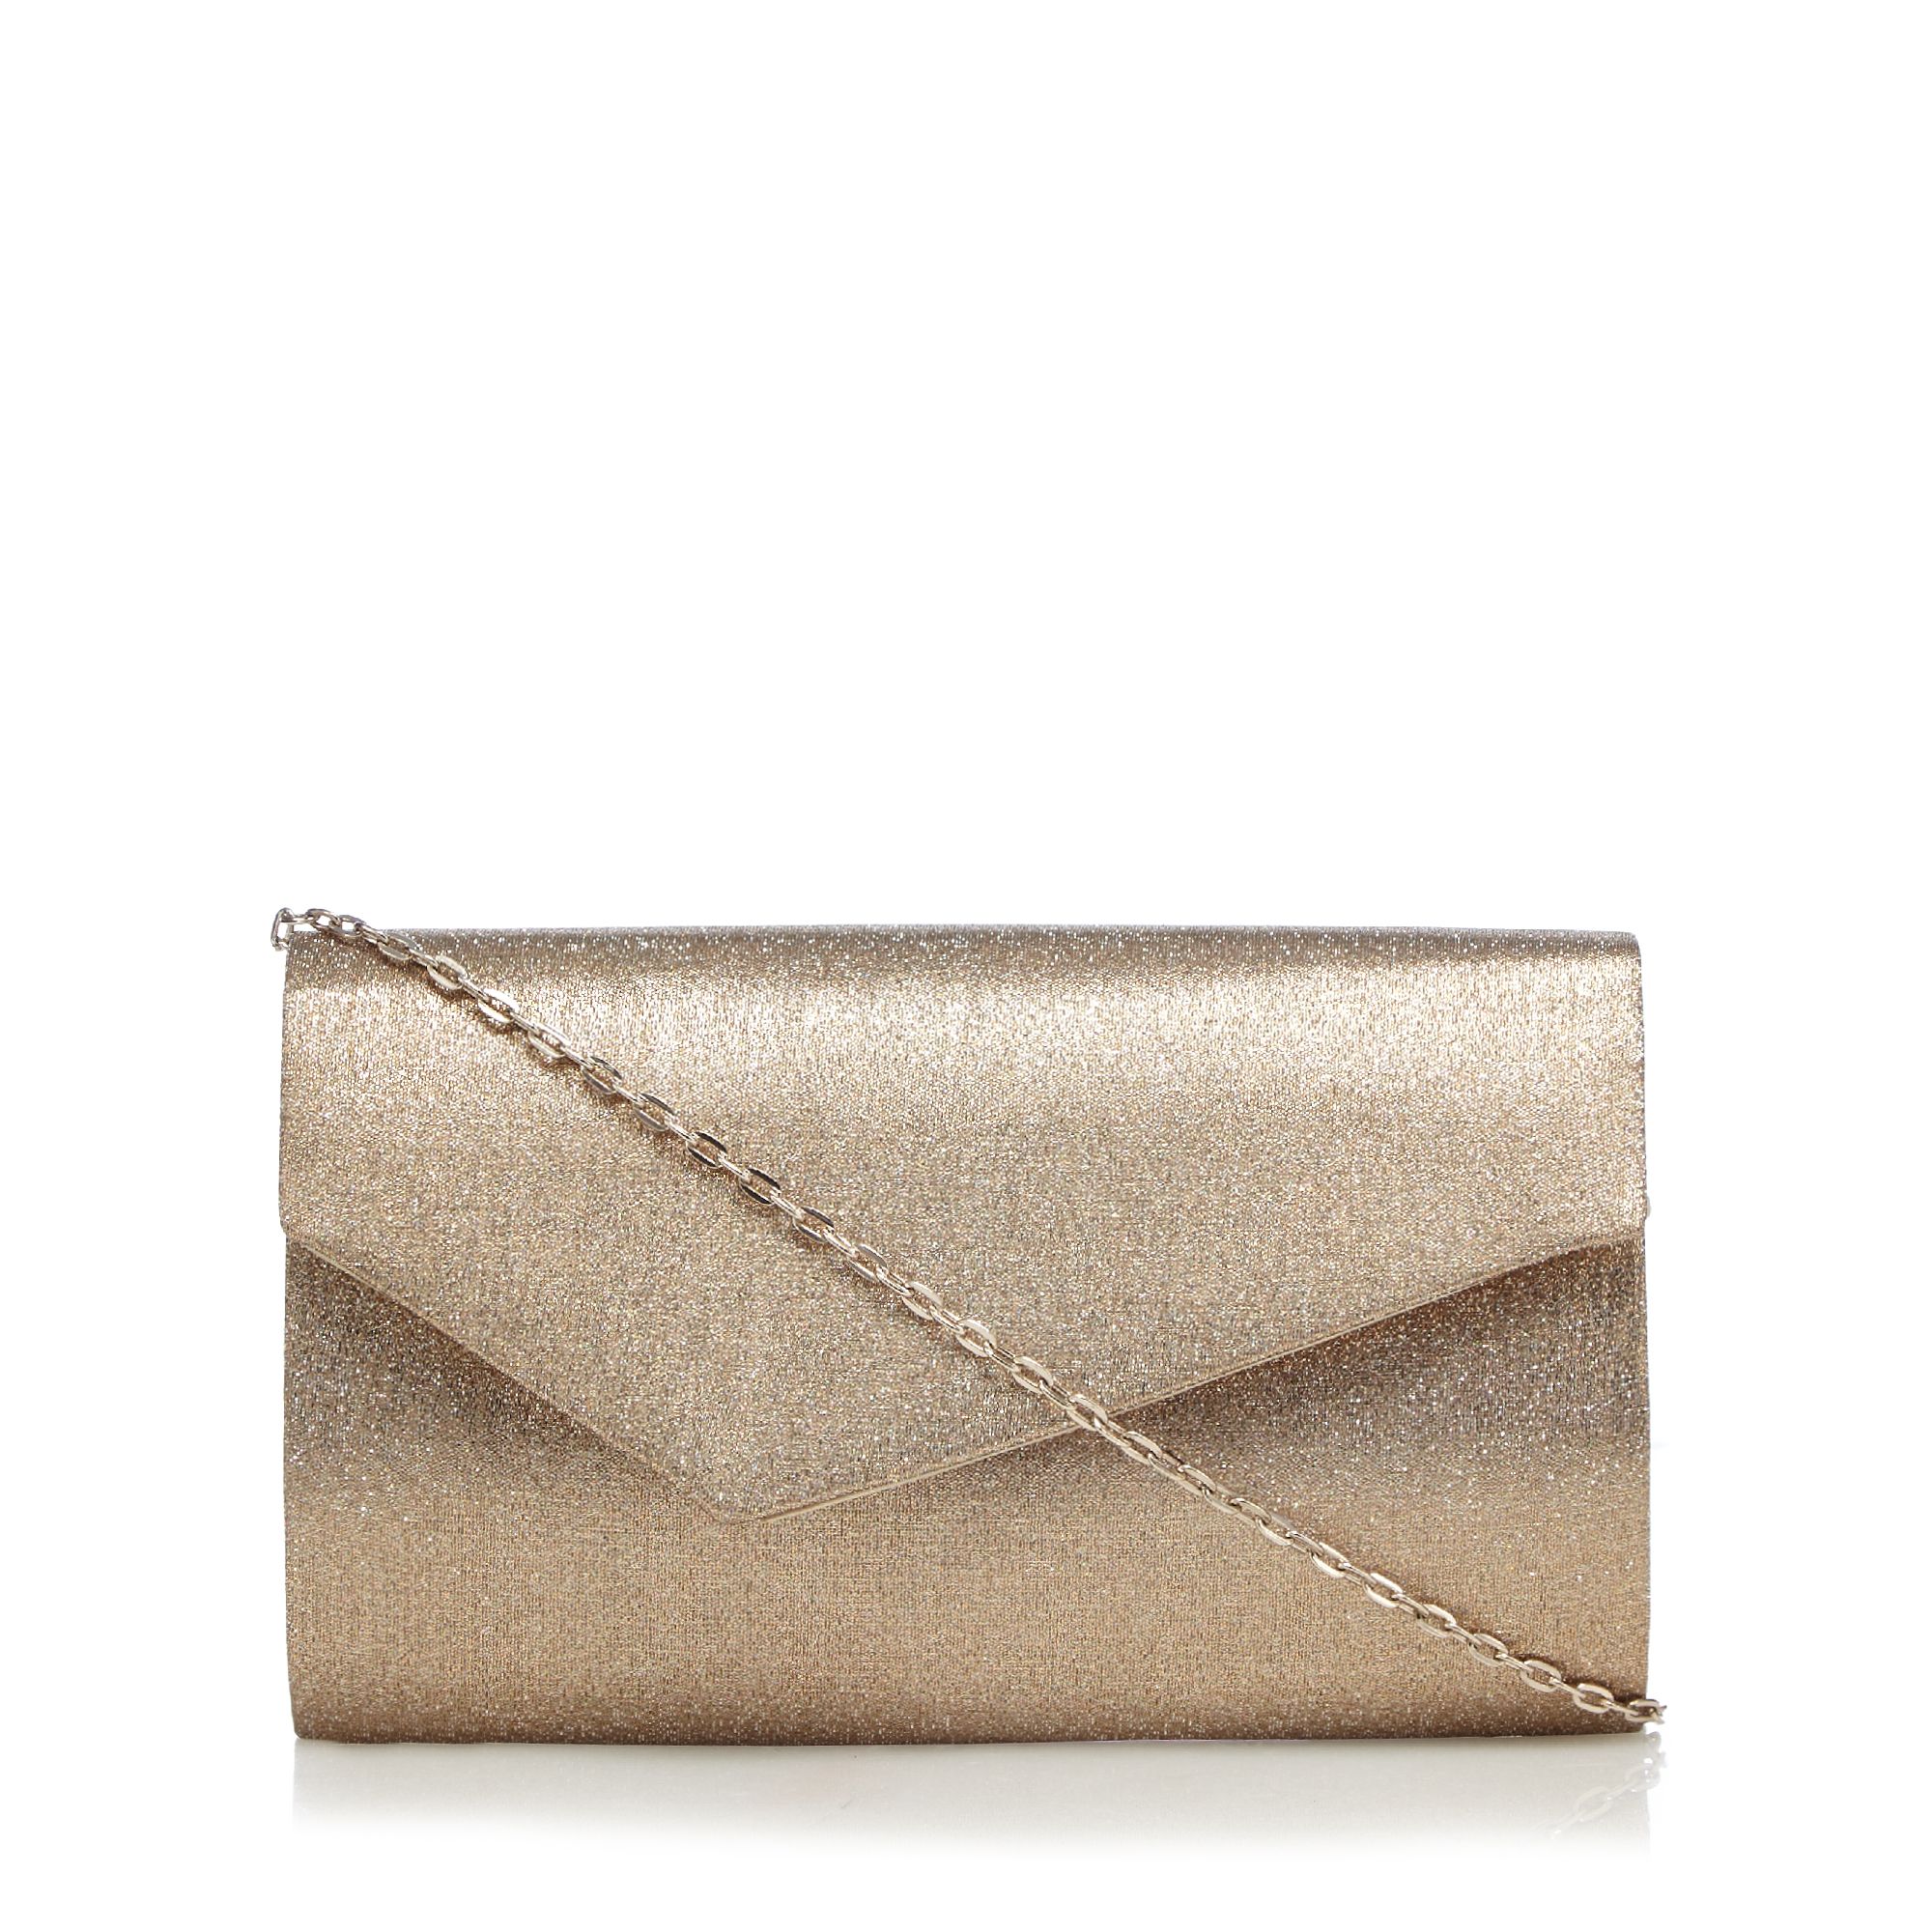 Debut Womens Gold Glitter Asymmetric Clutch Bag From Debenhams | eBay